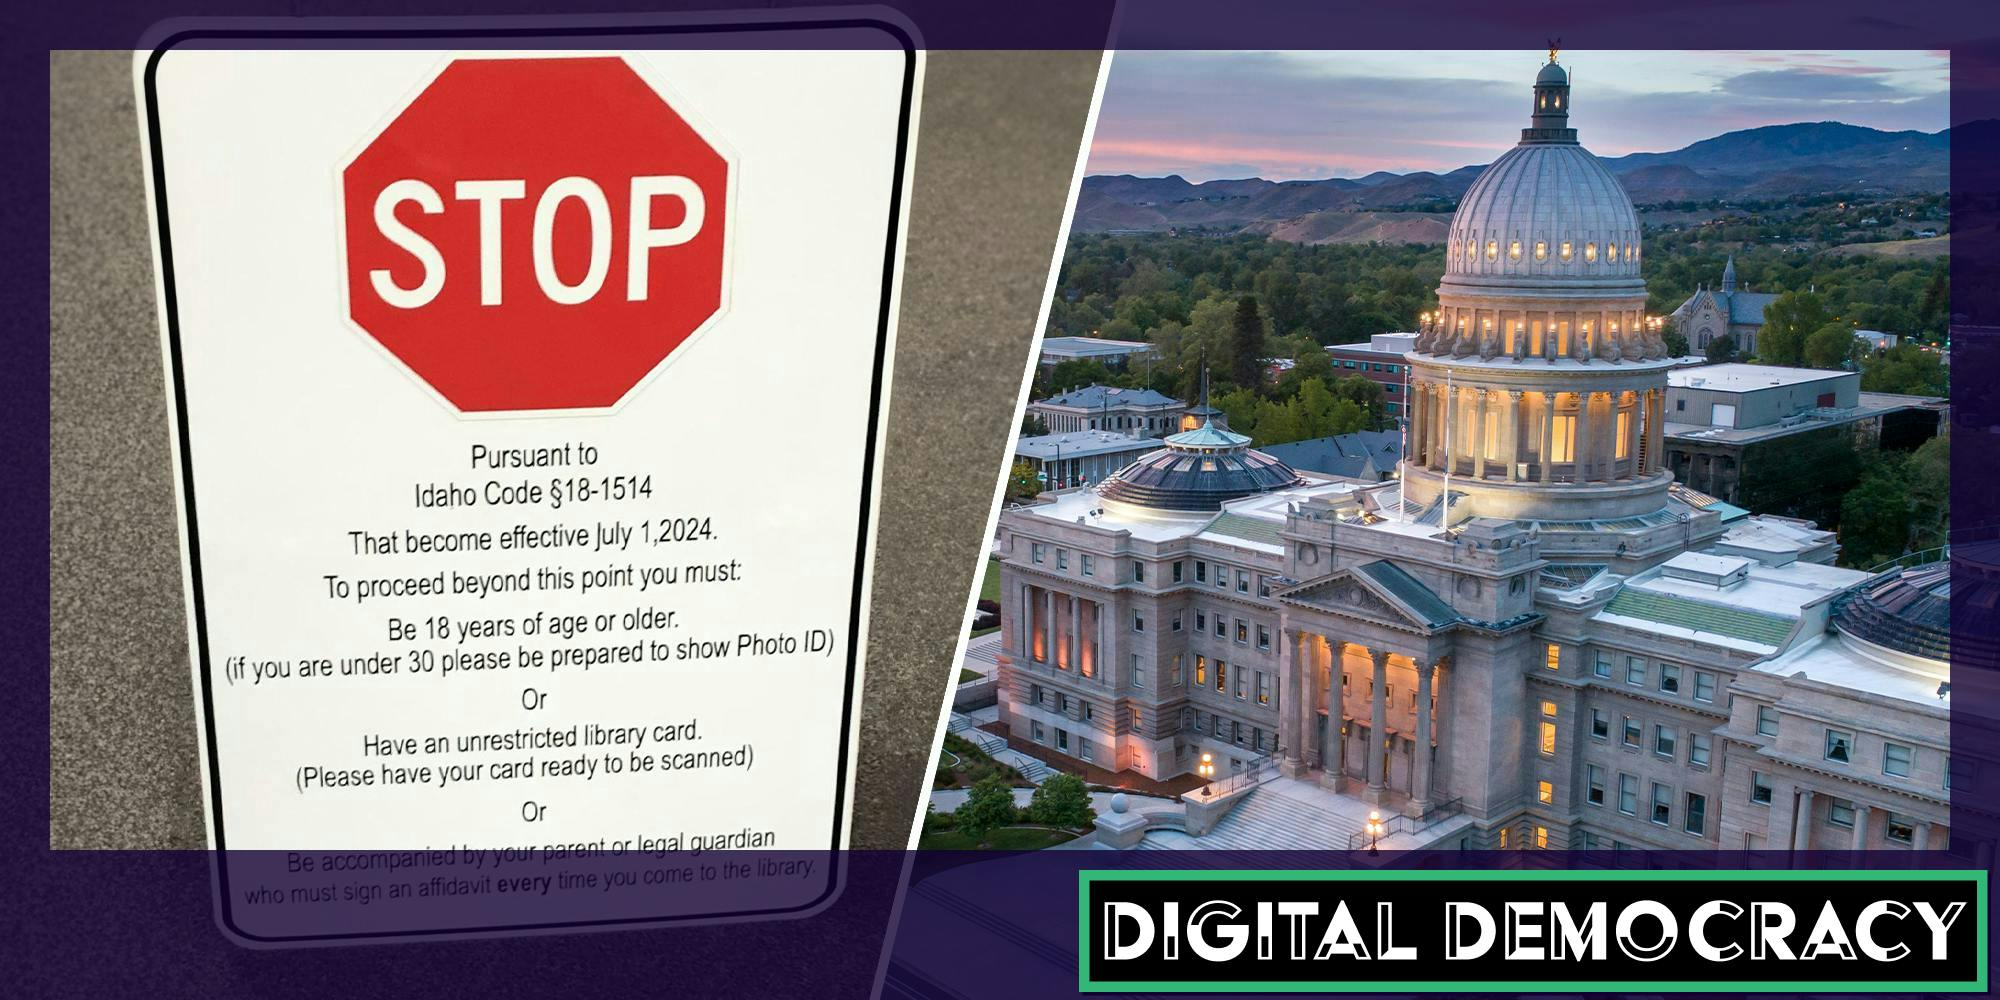 Idaho library bill. The Daily Dot newsletter web_crawlr 'Digital Democracy' logo is in the bottom right corner.